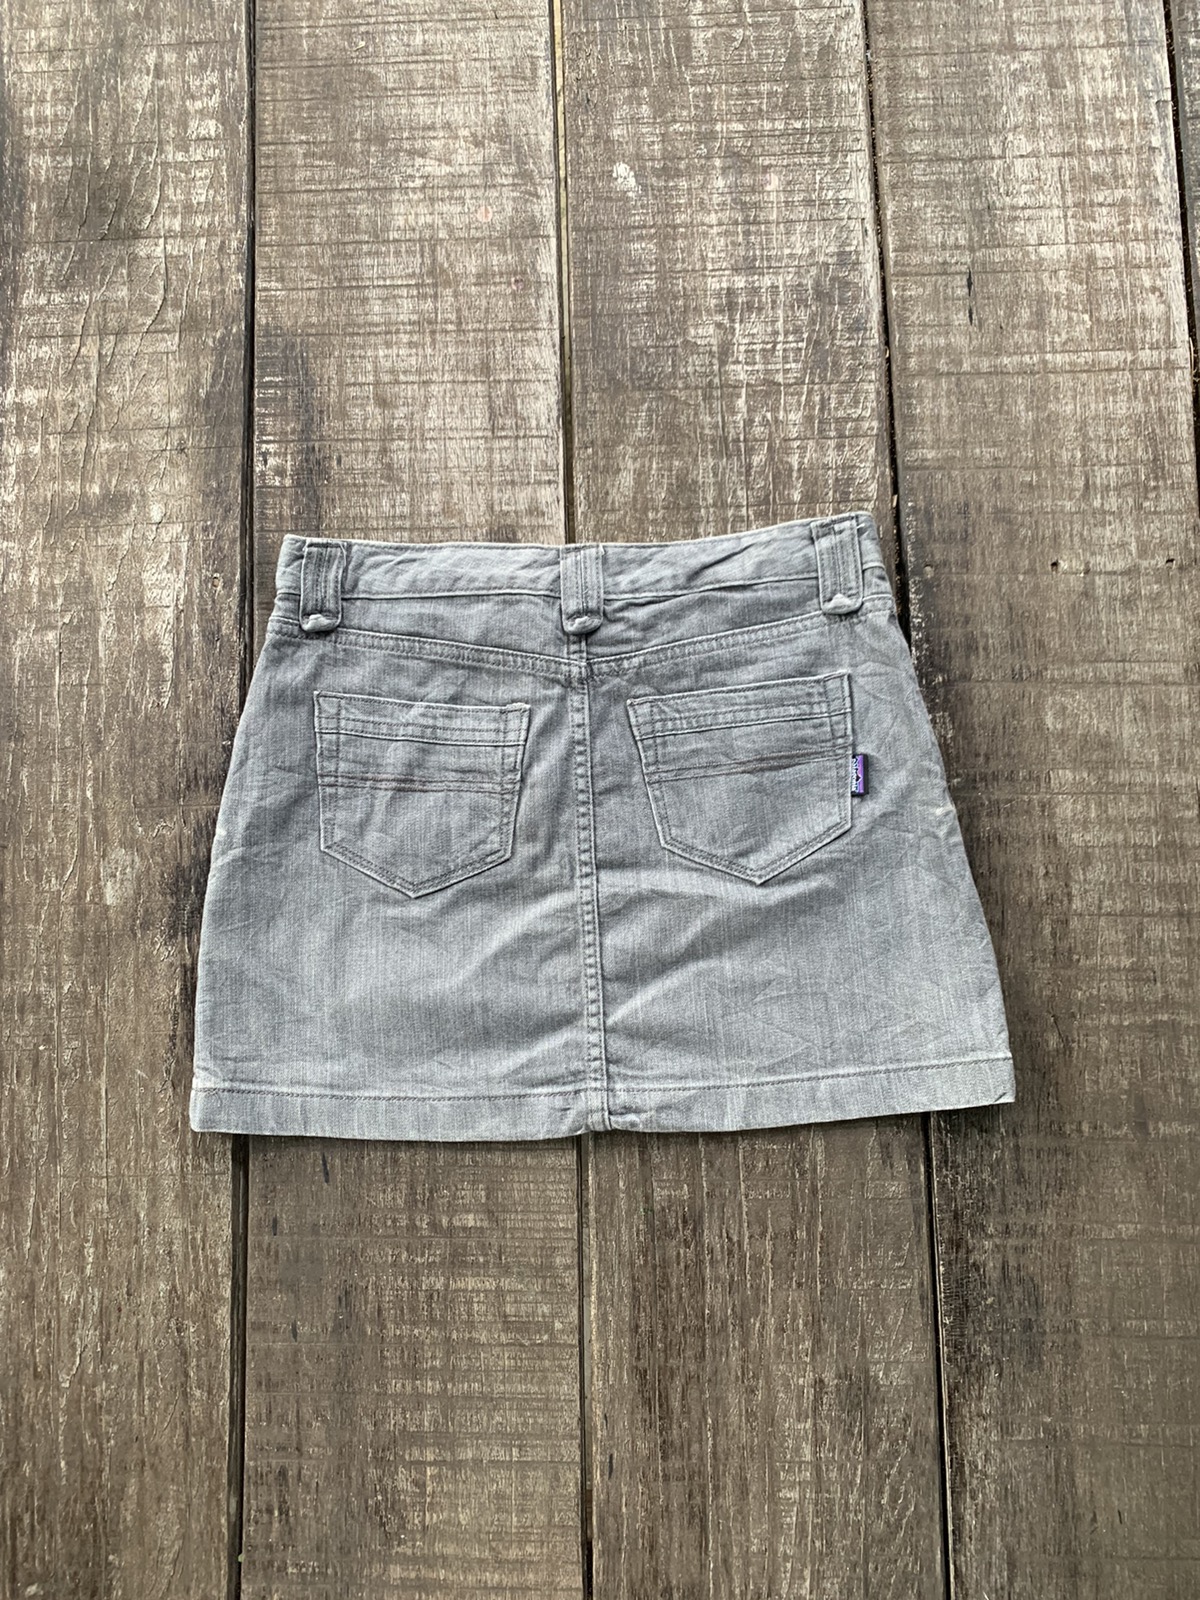 Patagonia jeans mini skirt - 2